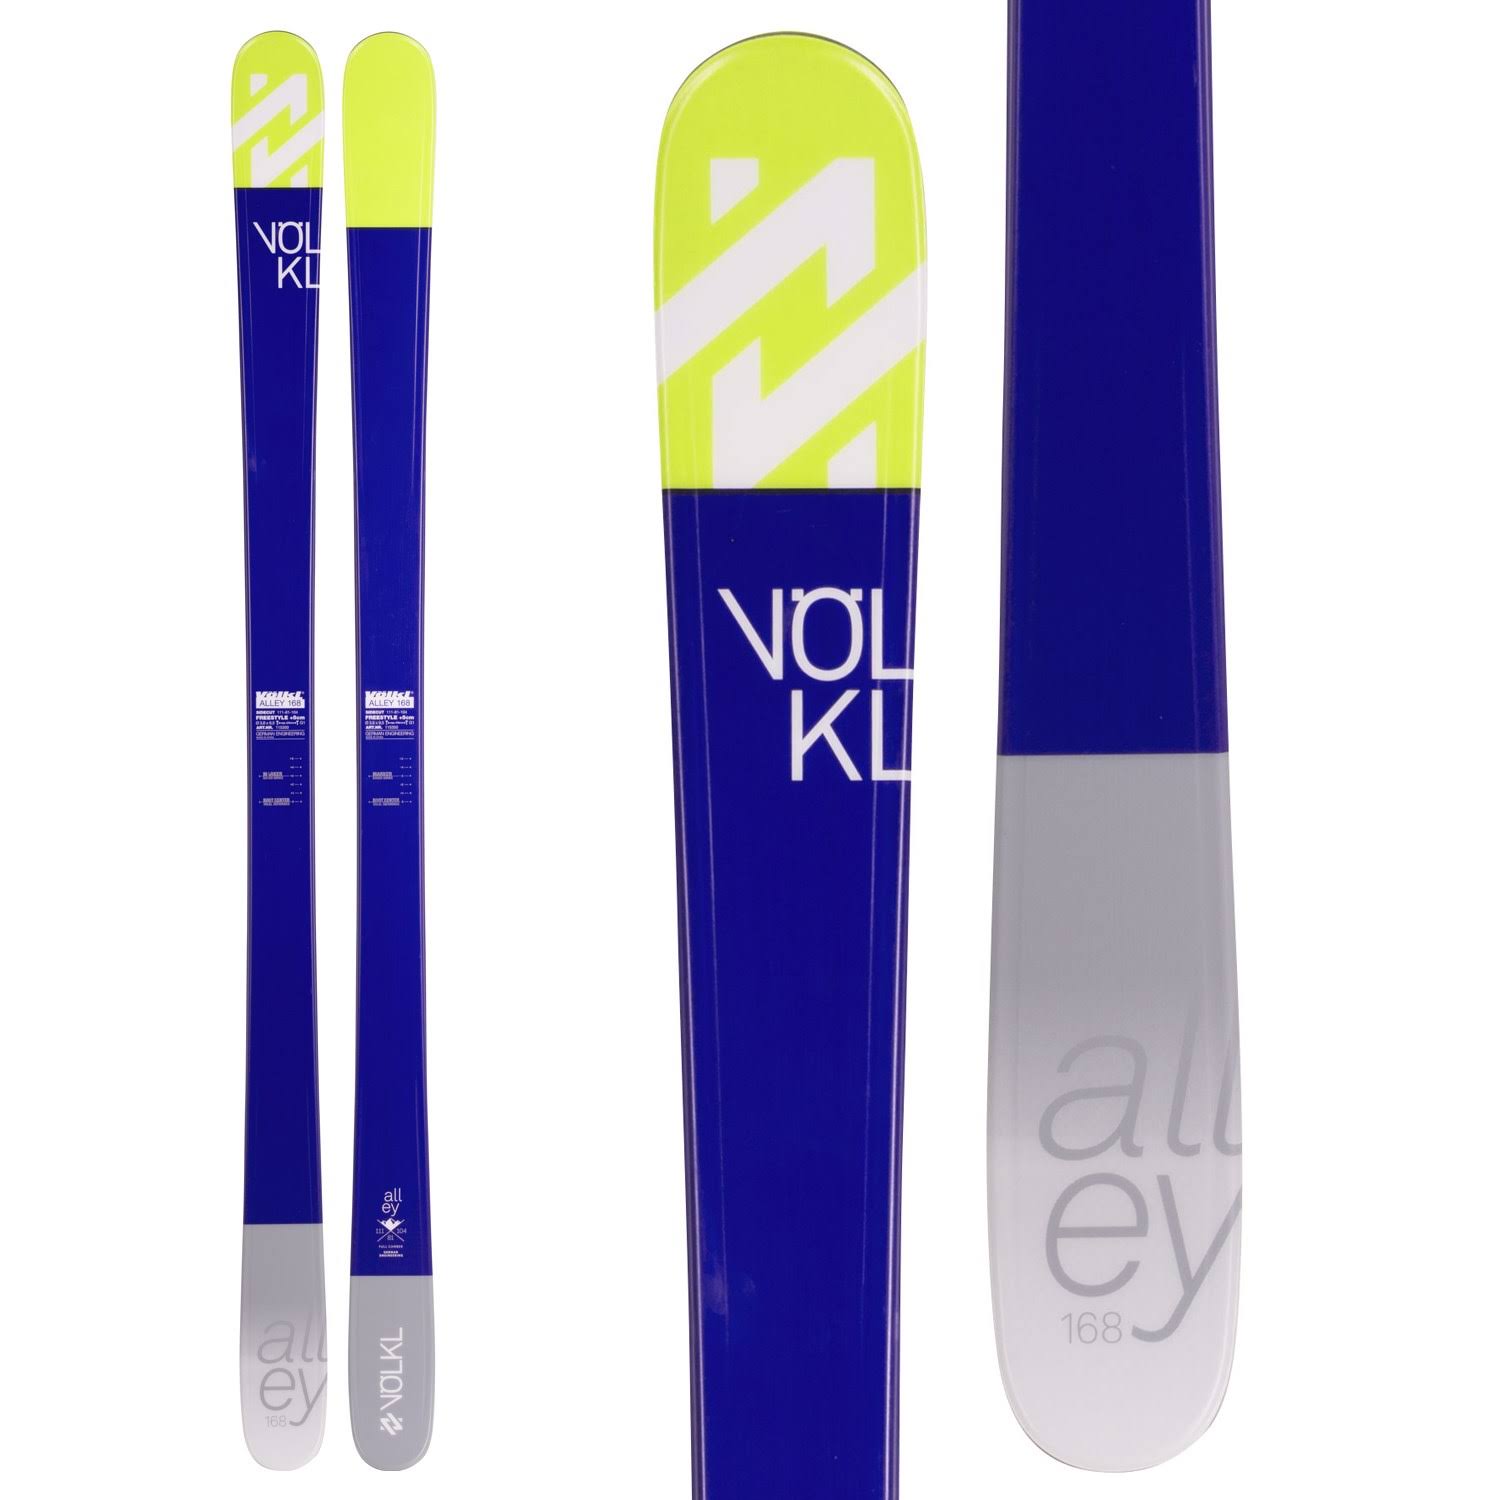 Volkl Men's Alley 2016 Skis - 168 cm